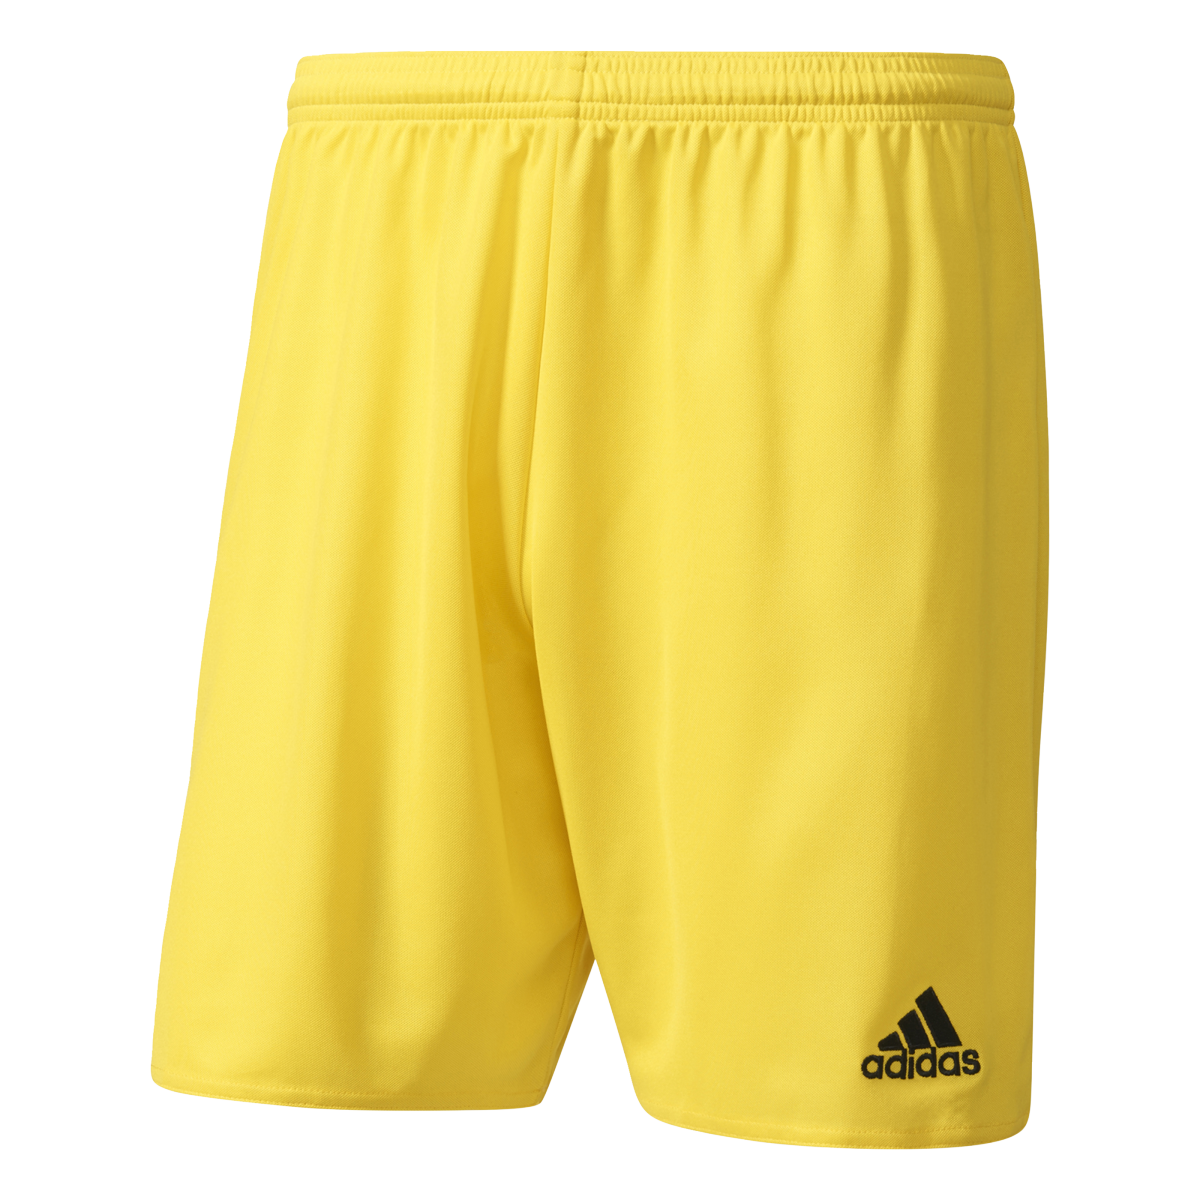 Adidas Parma 16 žlutá/černá UK Junior M Dětské